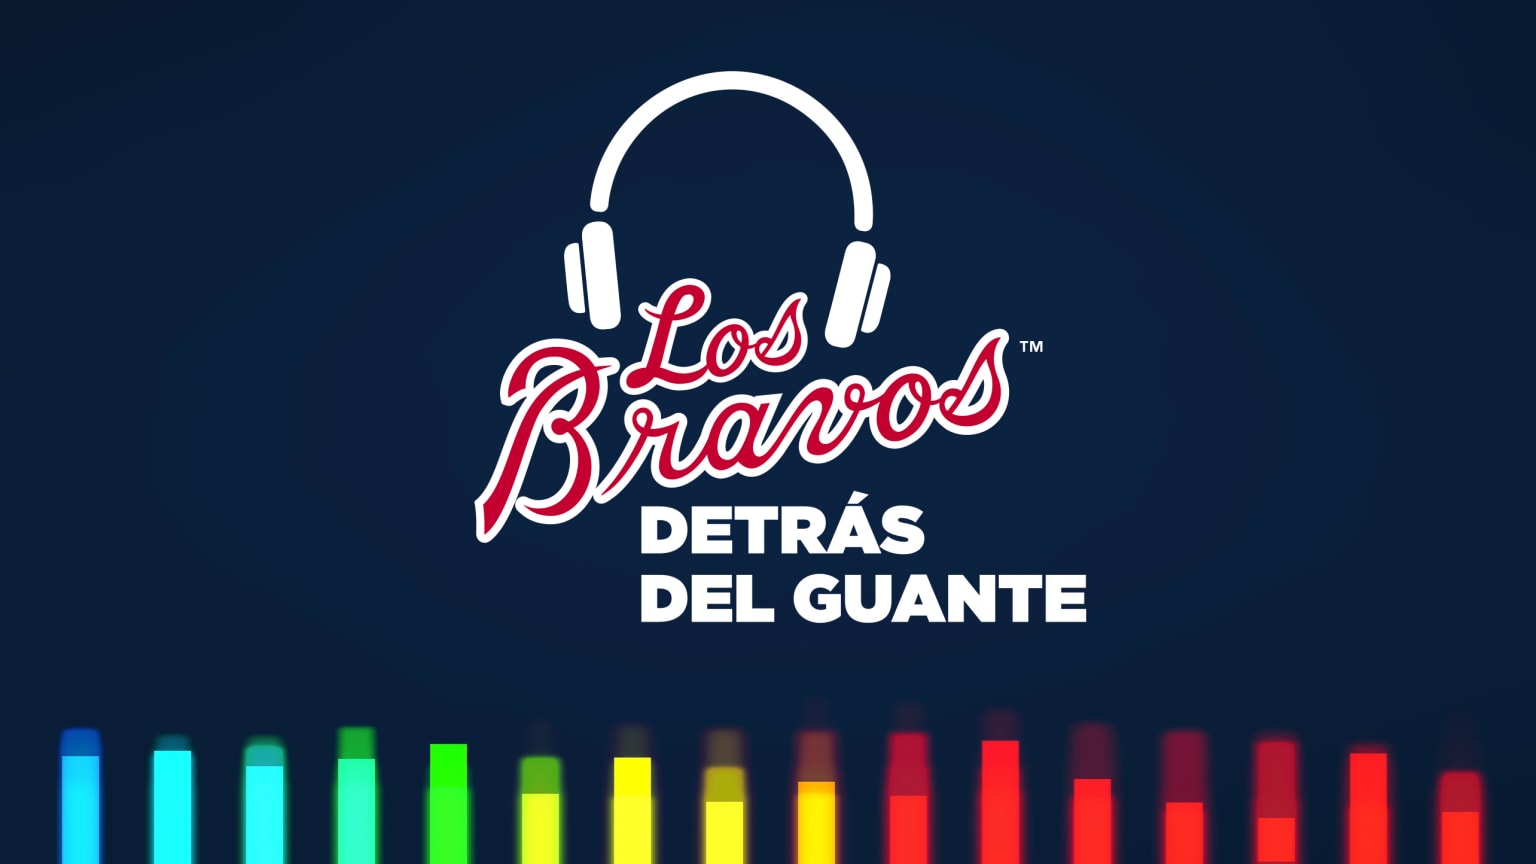 Atlanta Braves to celebrate Hispanic and Latino culture with seventh annual  Los Bravos Night presented by Georgia Power on September 28 – Latino Sports